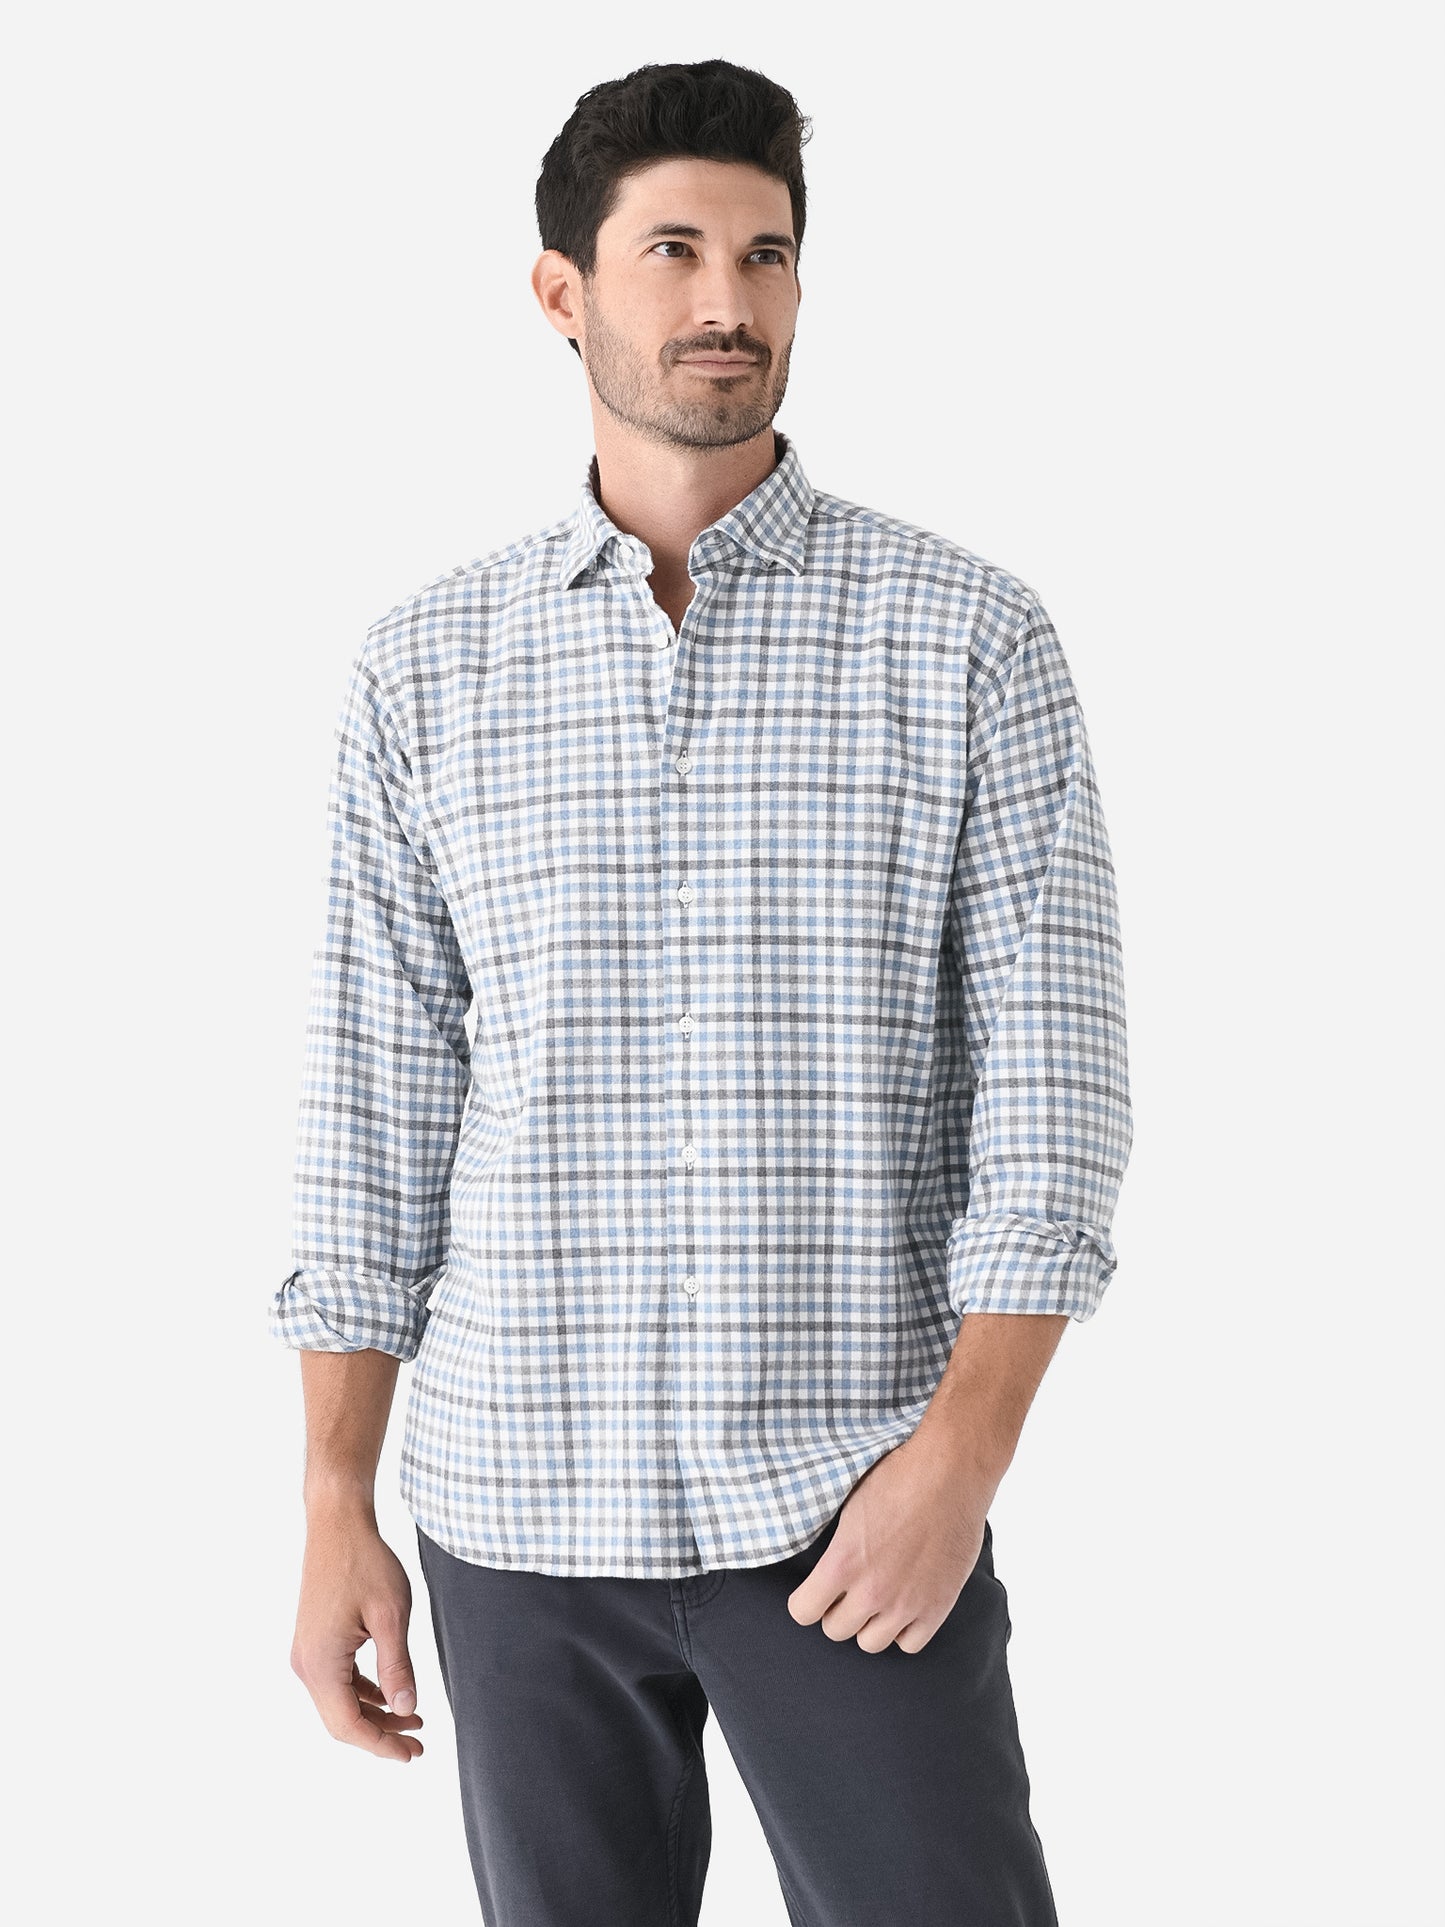 Miller Westby Men's Shawano Button-Down Shirt